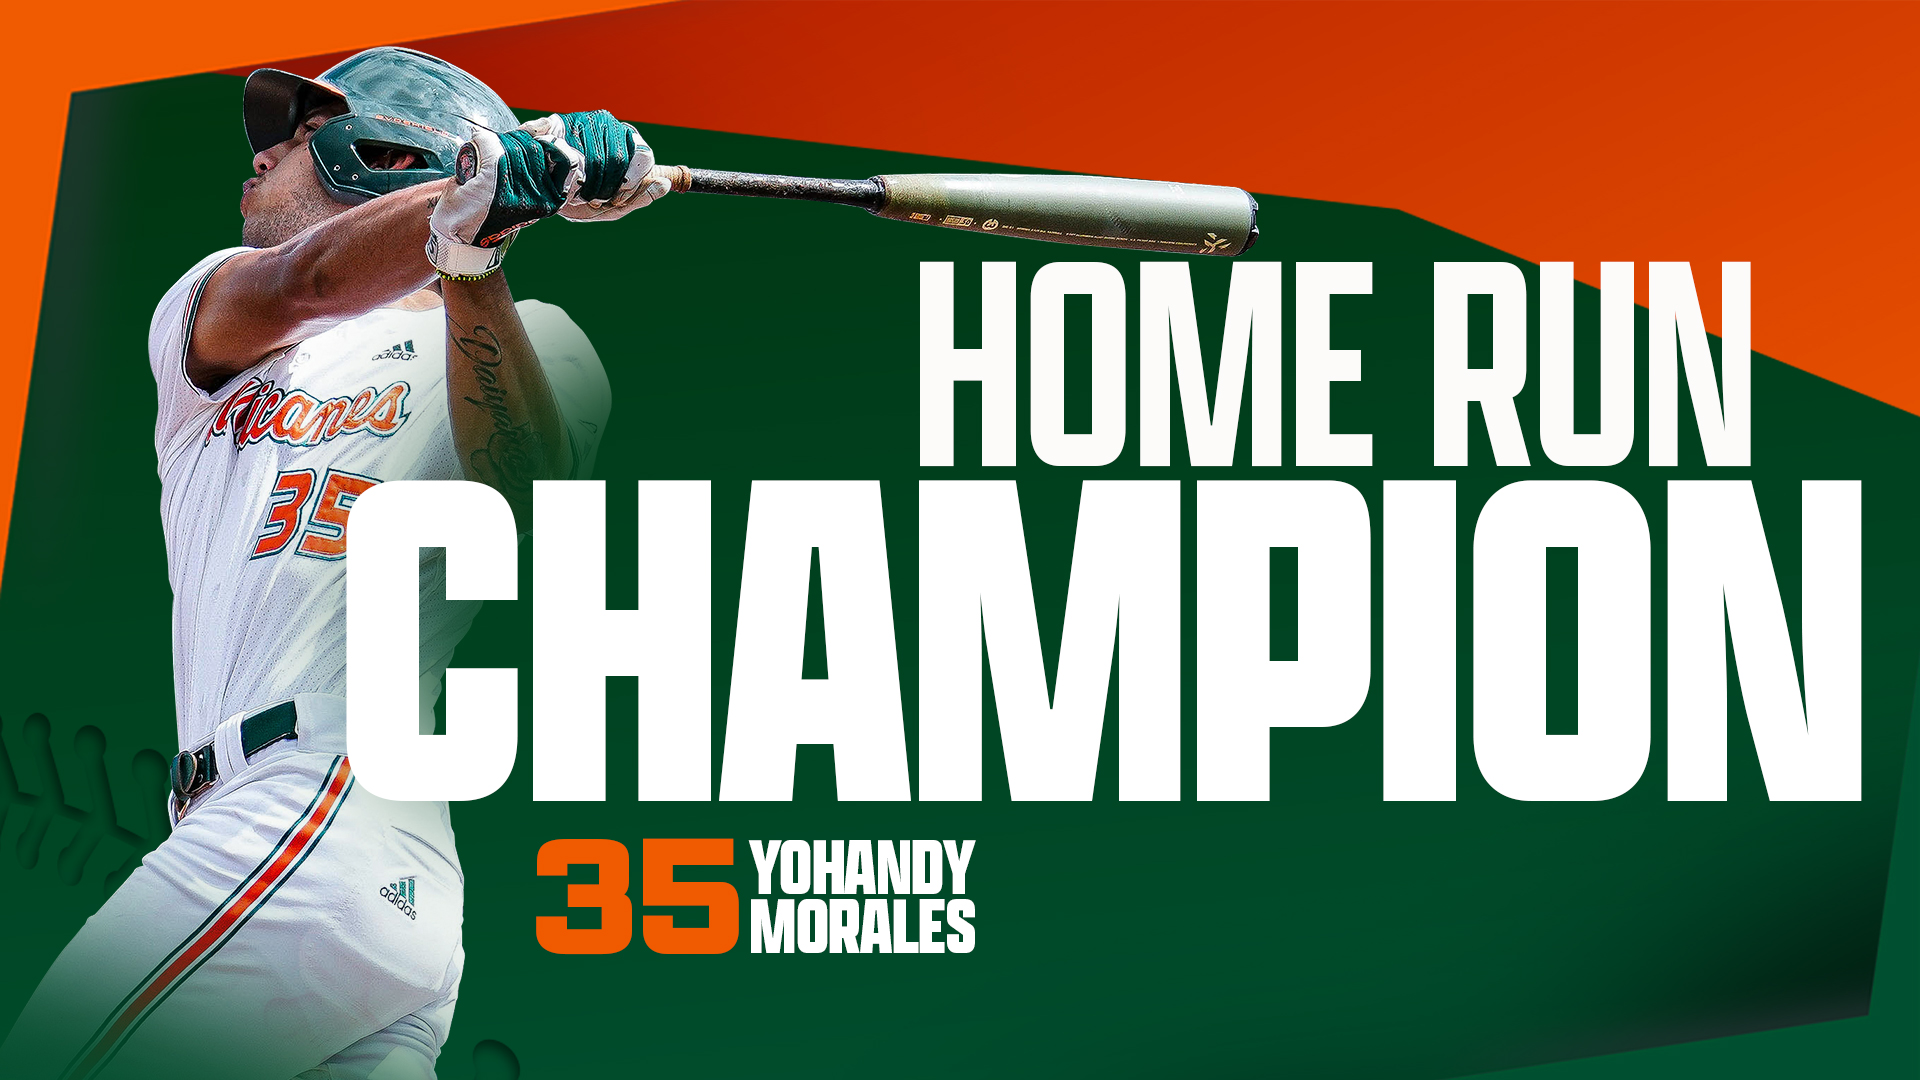 Miami Hurricanes Baseball on X: "The 2022 Home Run Champion is  𝗬𝗢𝗛𝗔𝗡𝗗𝗬 𝗠𝗢𝗥𝗔𝗟𝗘𝗦! Congrats, Yoyo! https://t.co/Gc7u2ImspY" / X